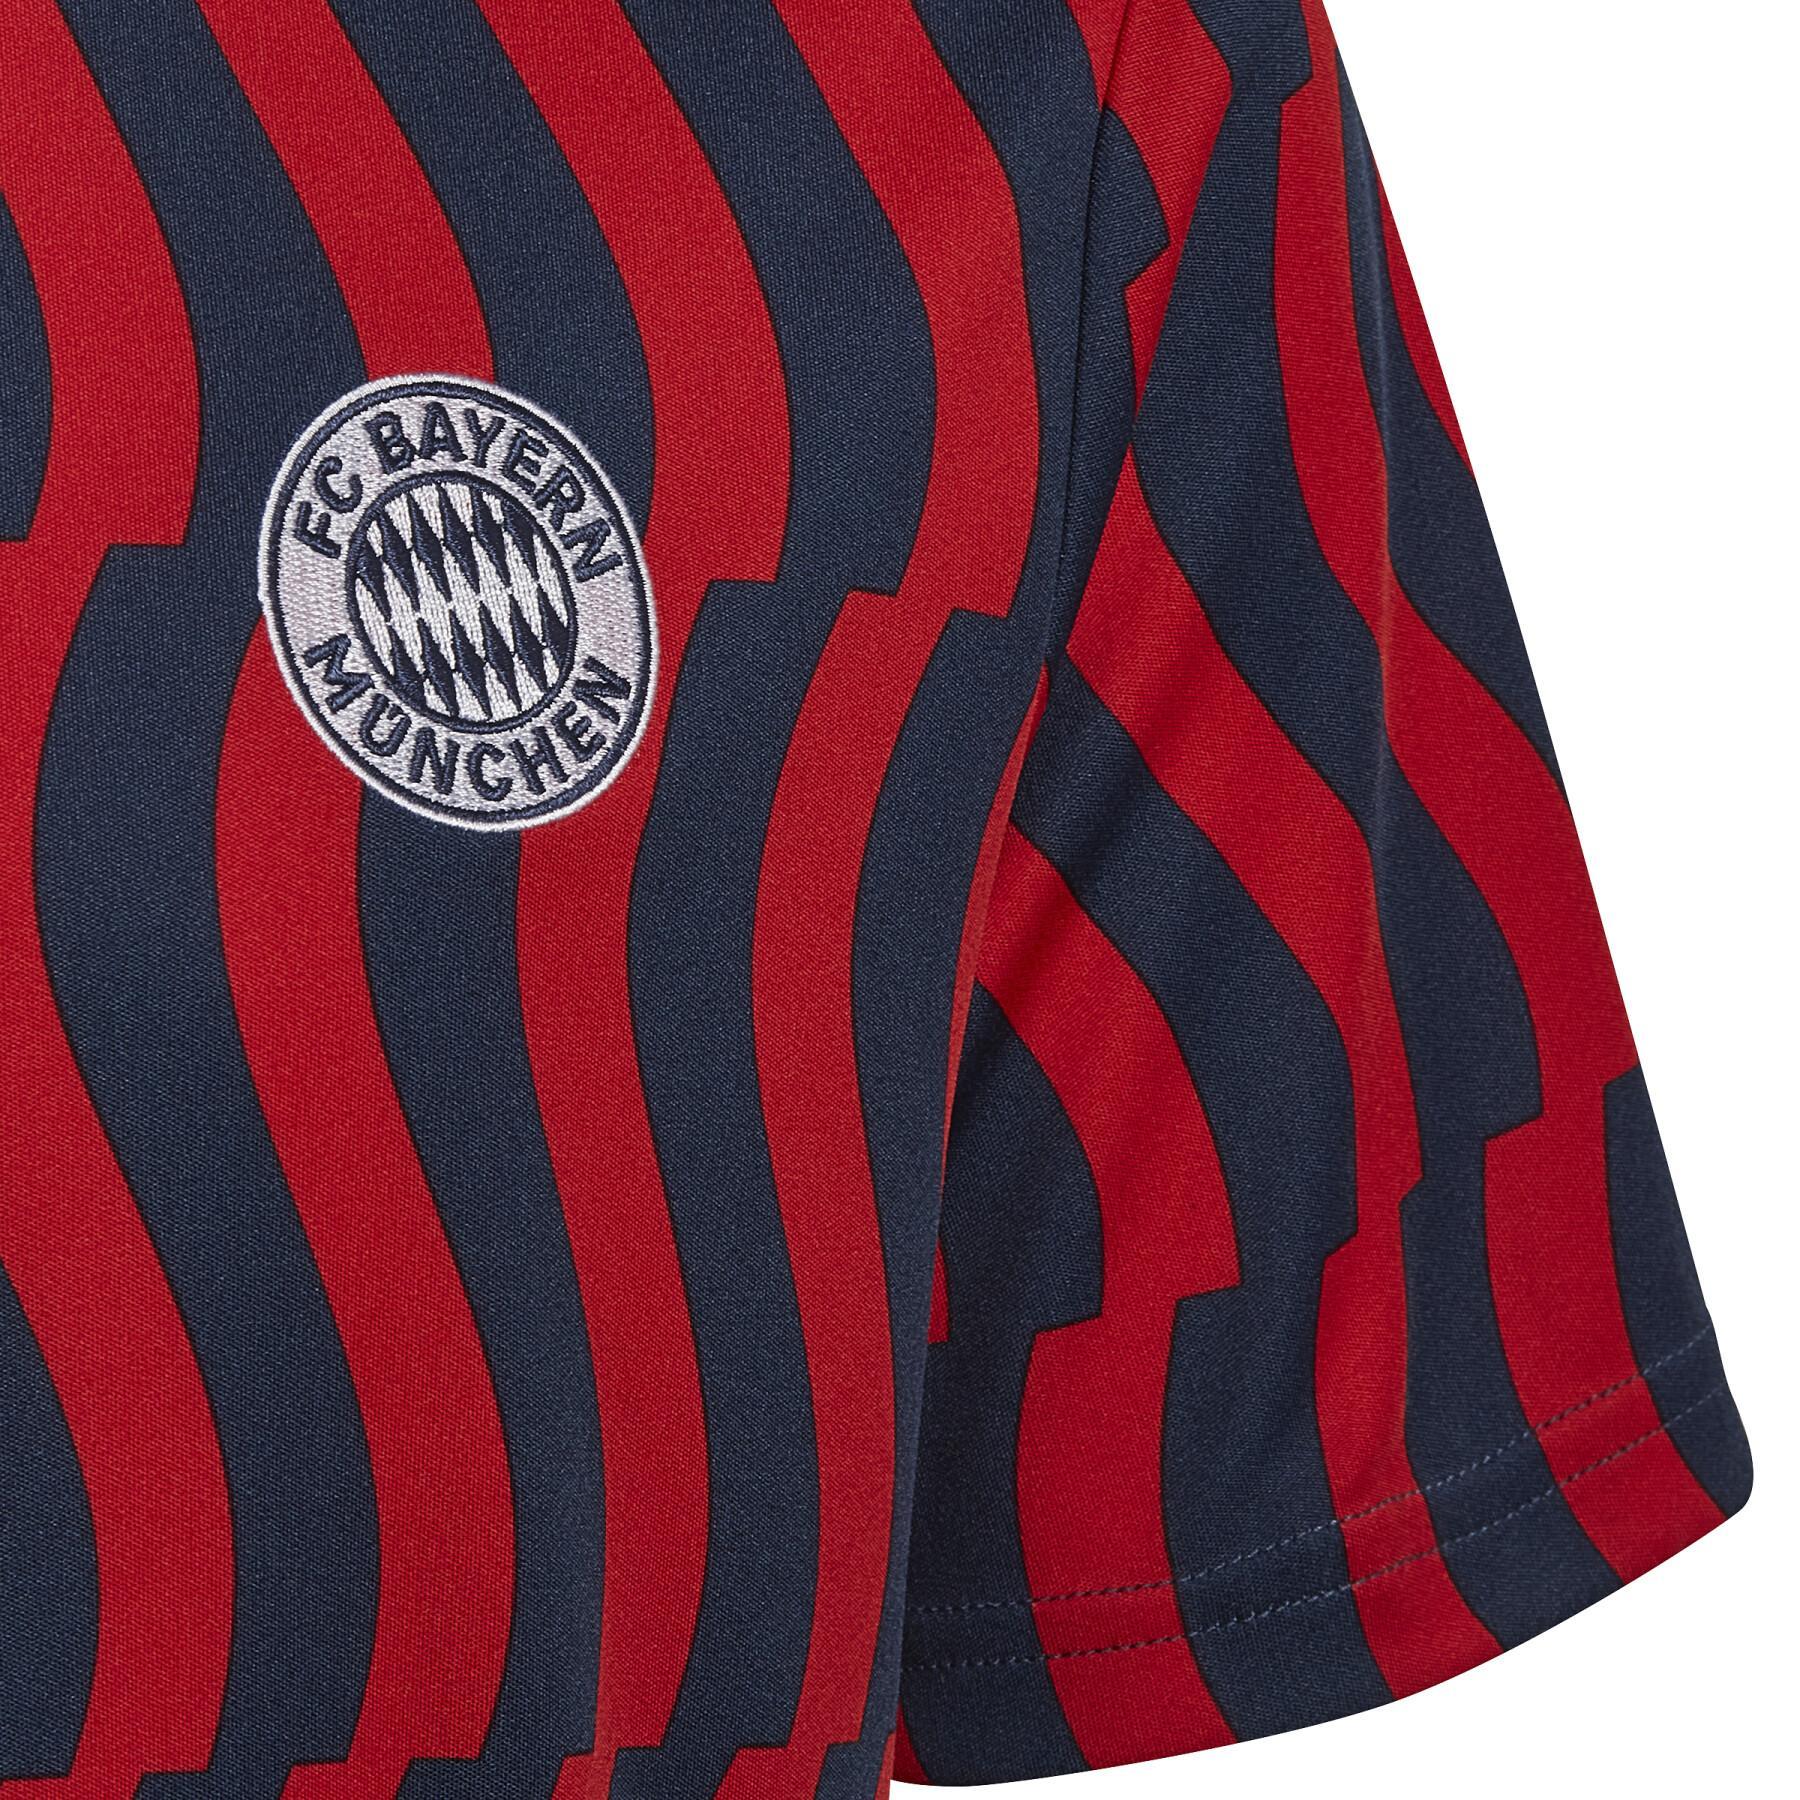 Koszulka domowa dla dzieci FC Bayern Munich 2021/22